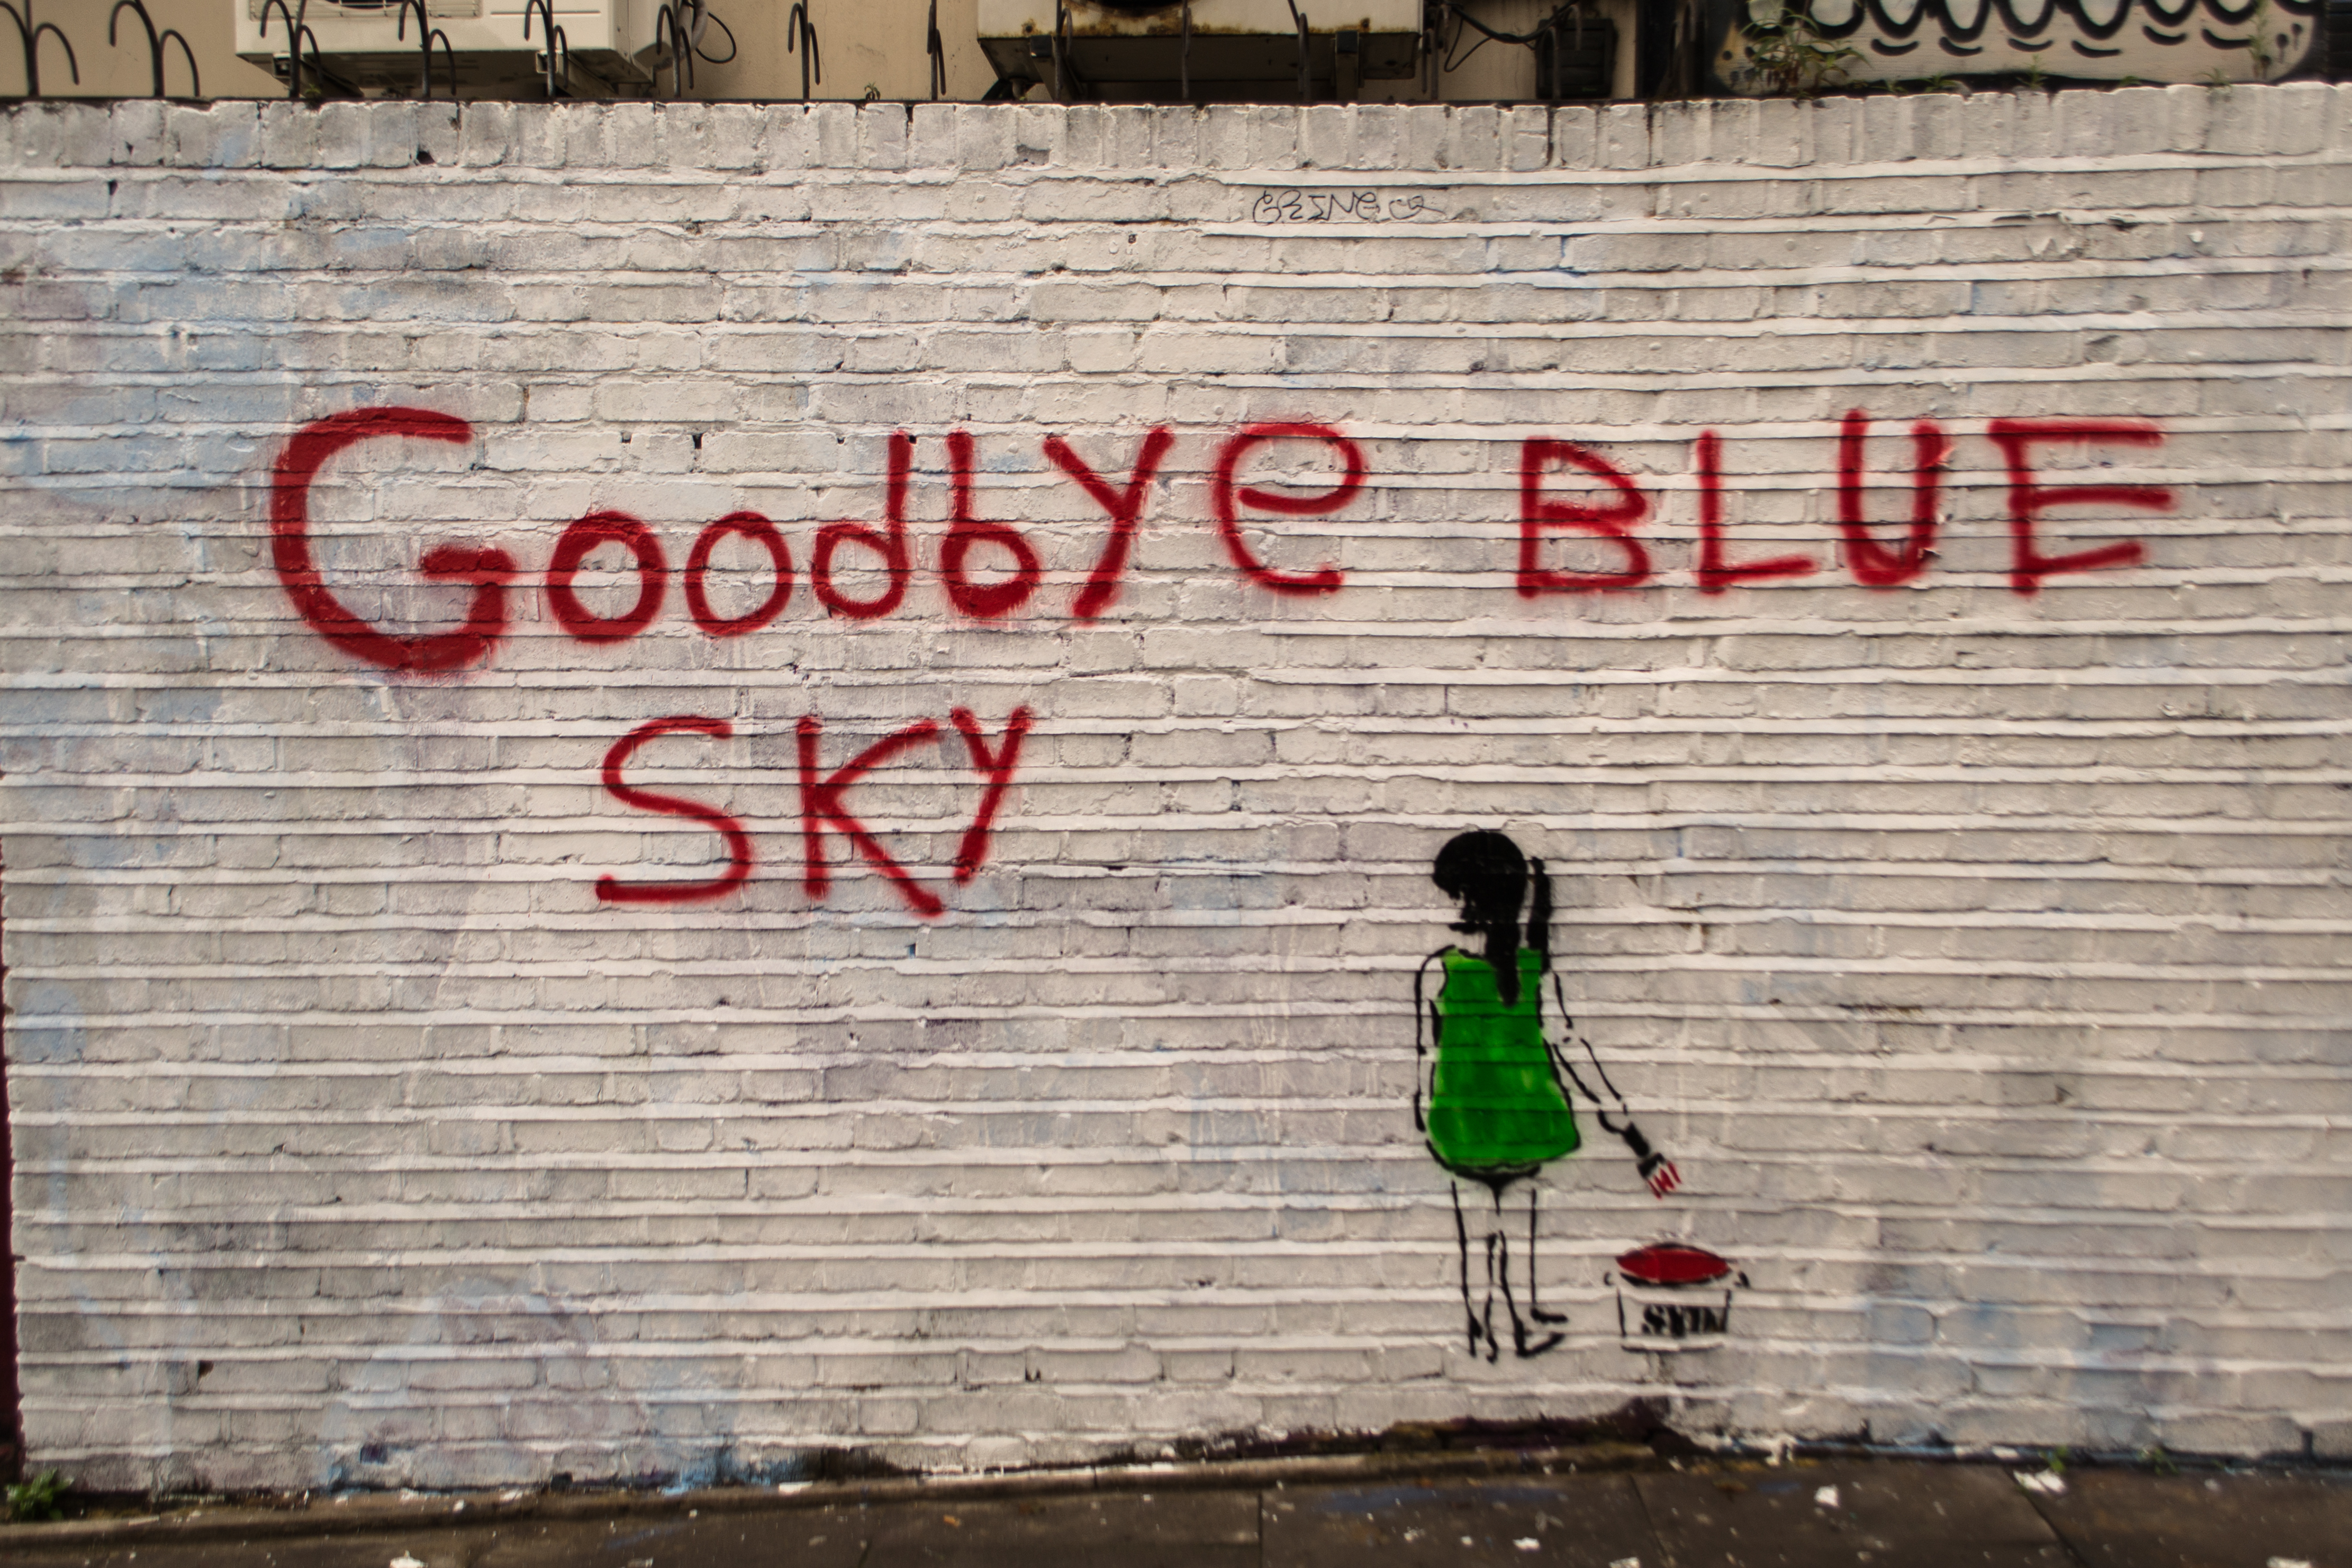 File:Graffiti in Shoreditch, London - Goodbye Blue Sky by SYD ...